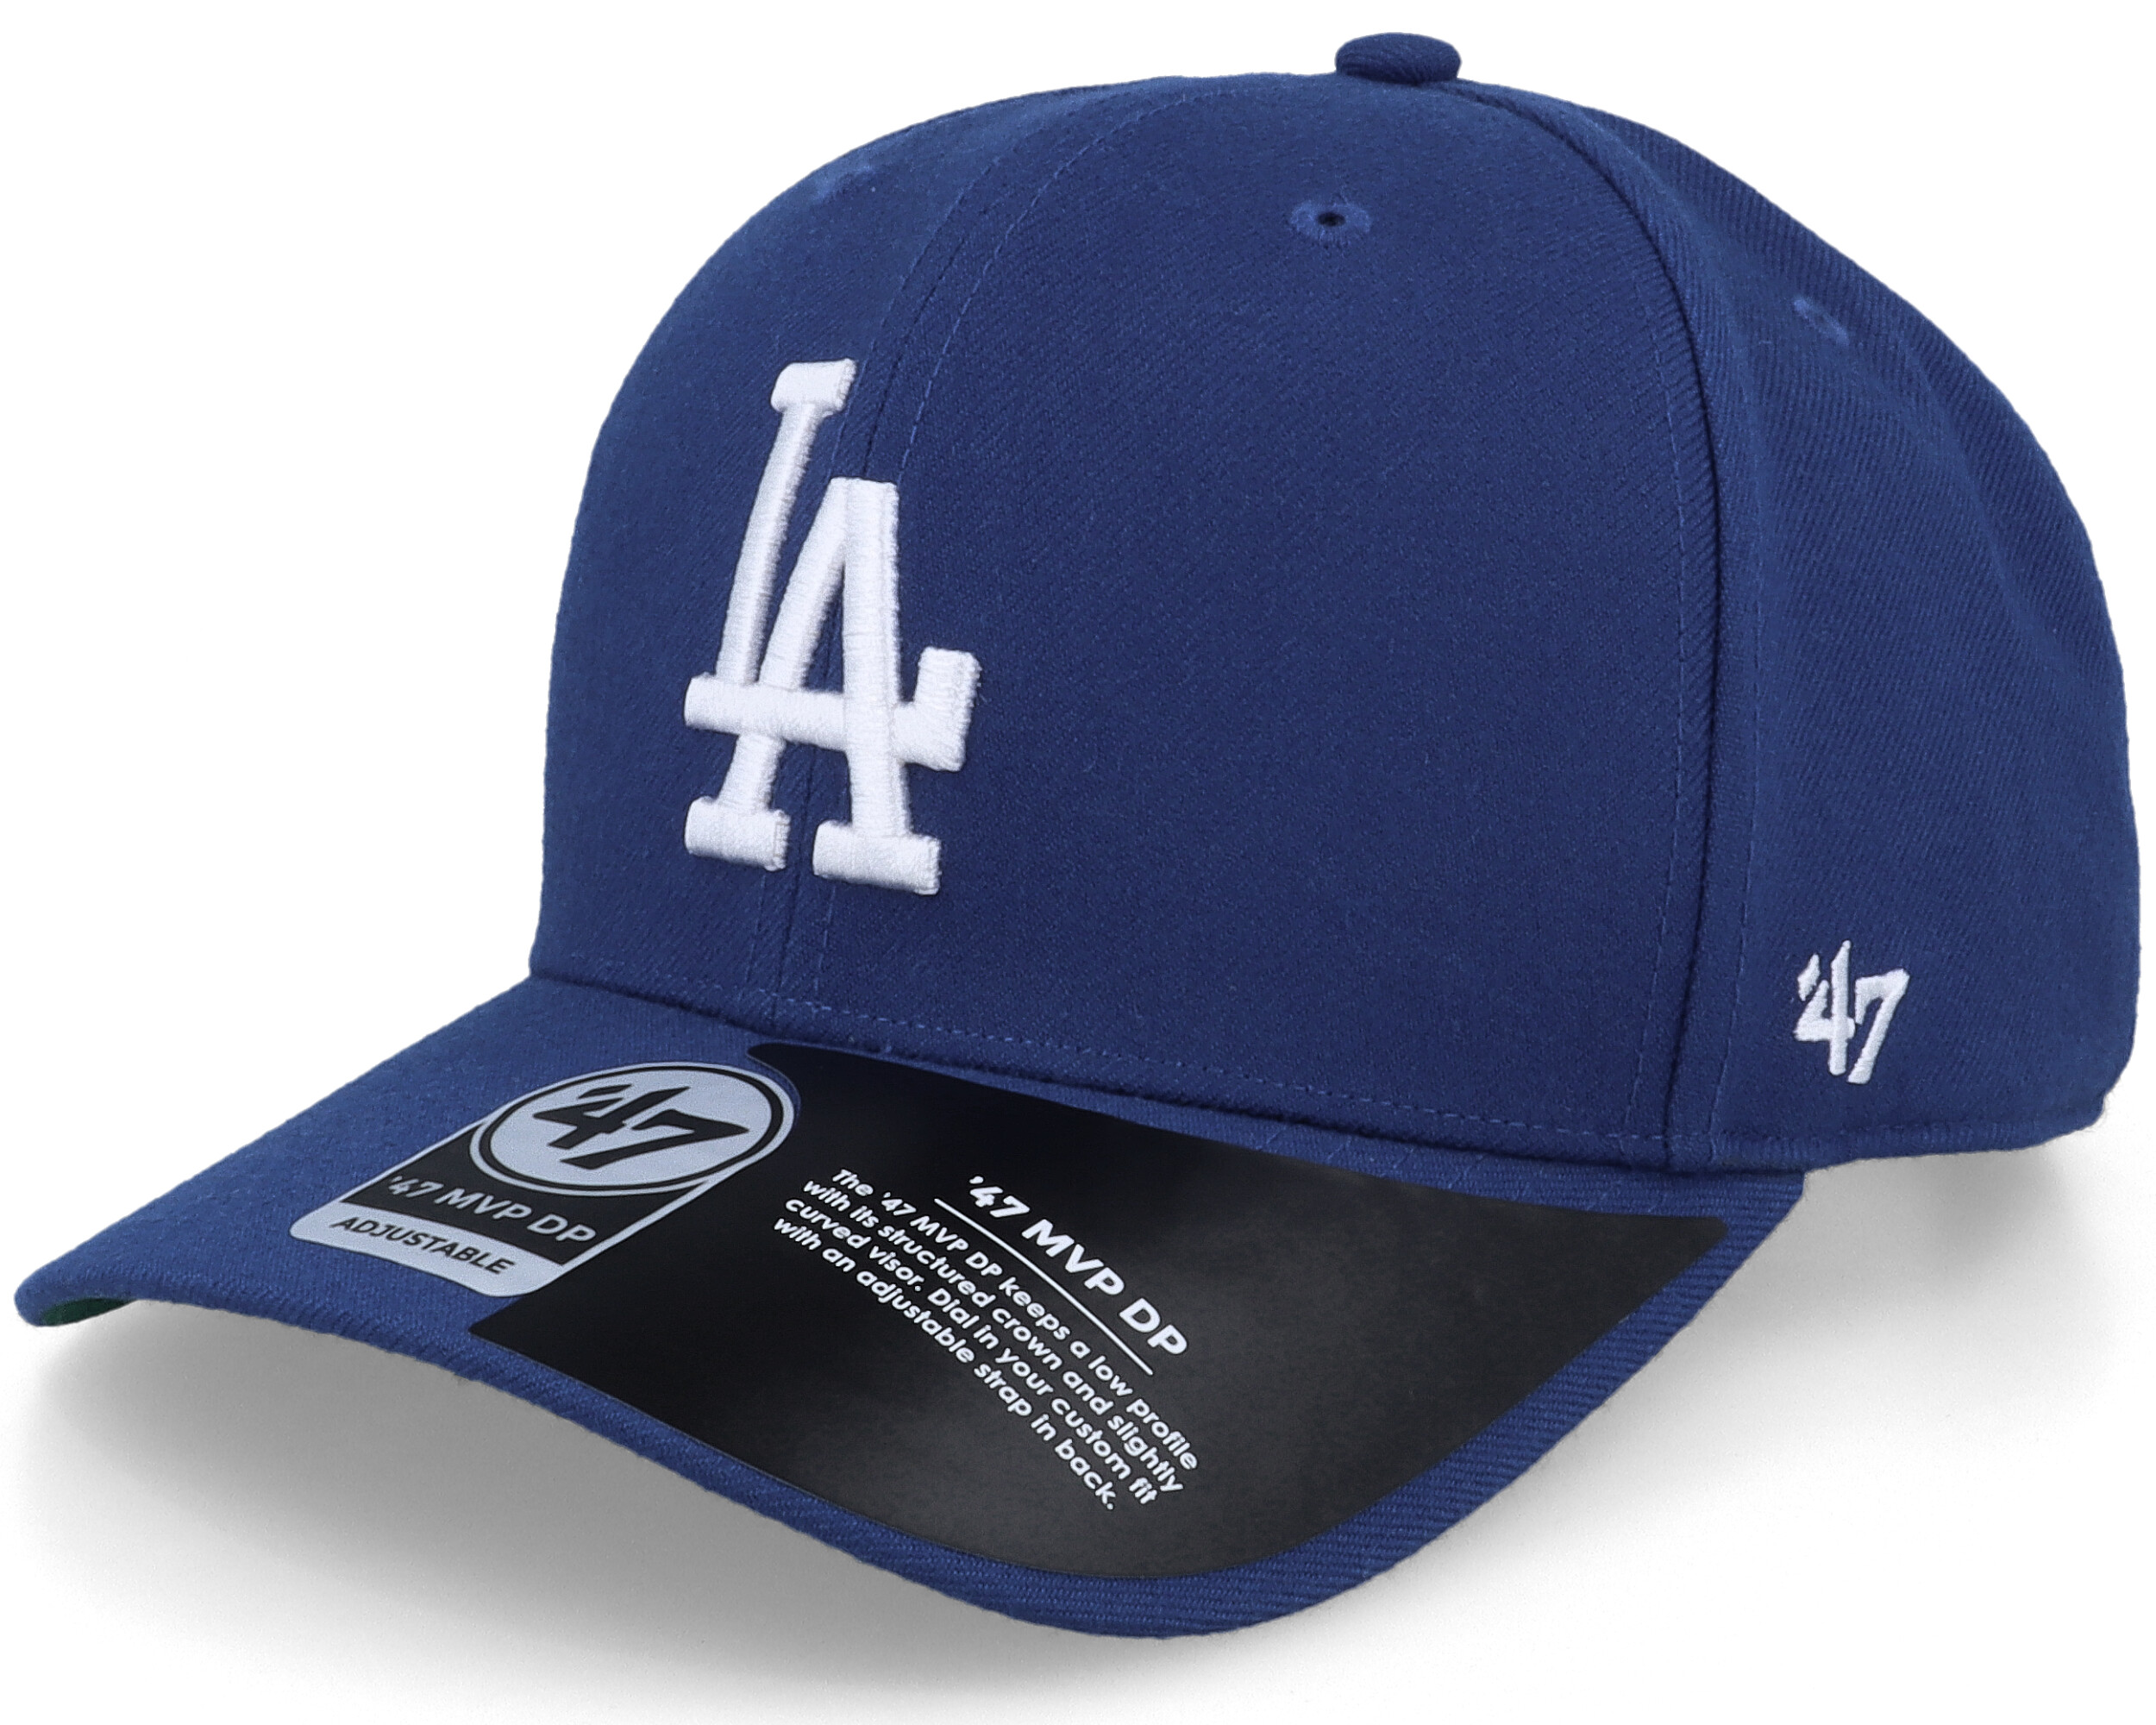 Gorra 47 MLB Los Ángeles Dodgers